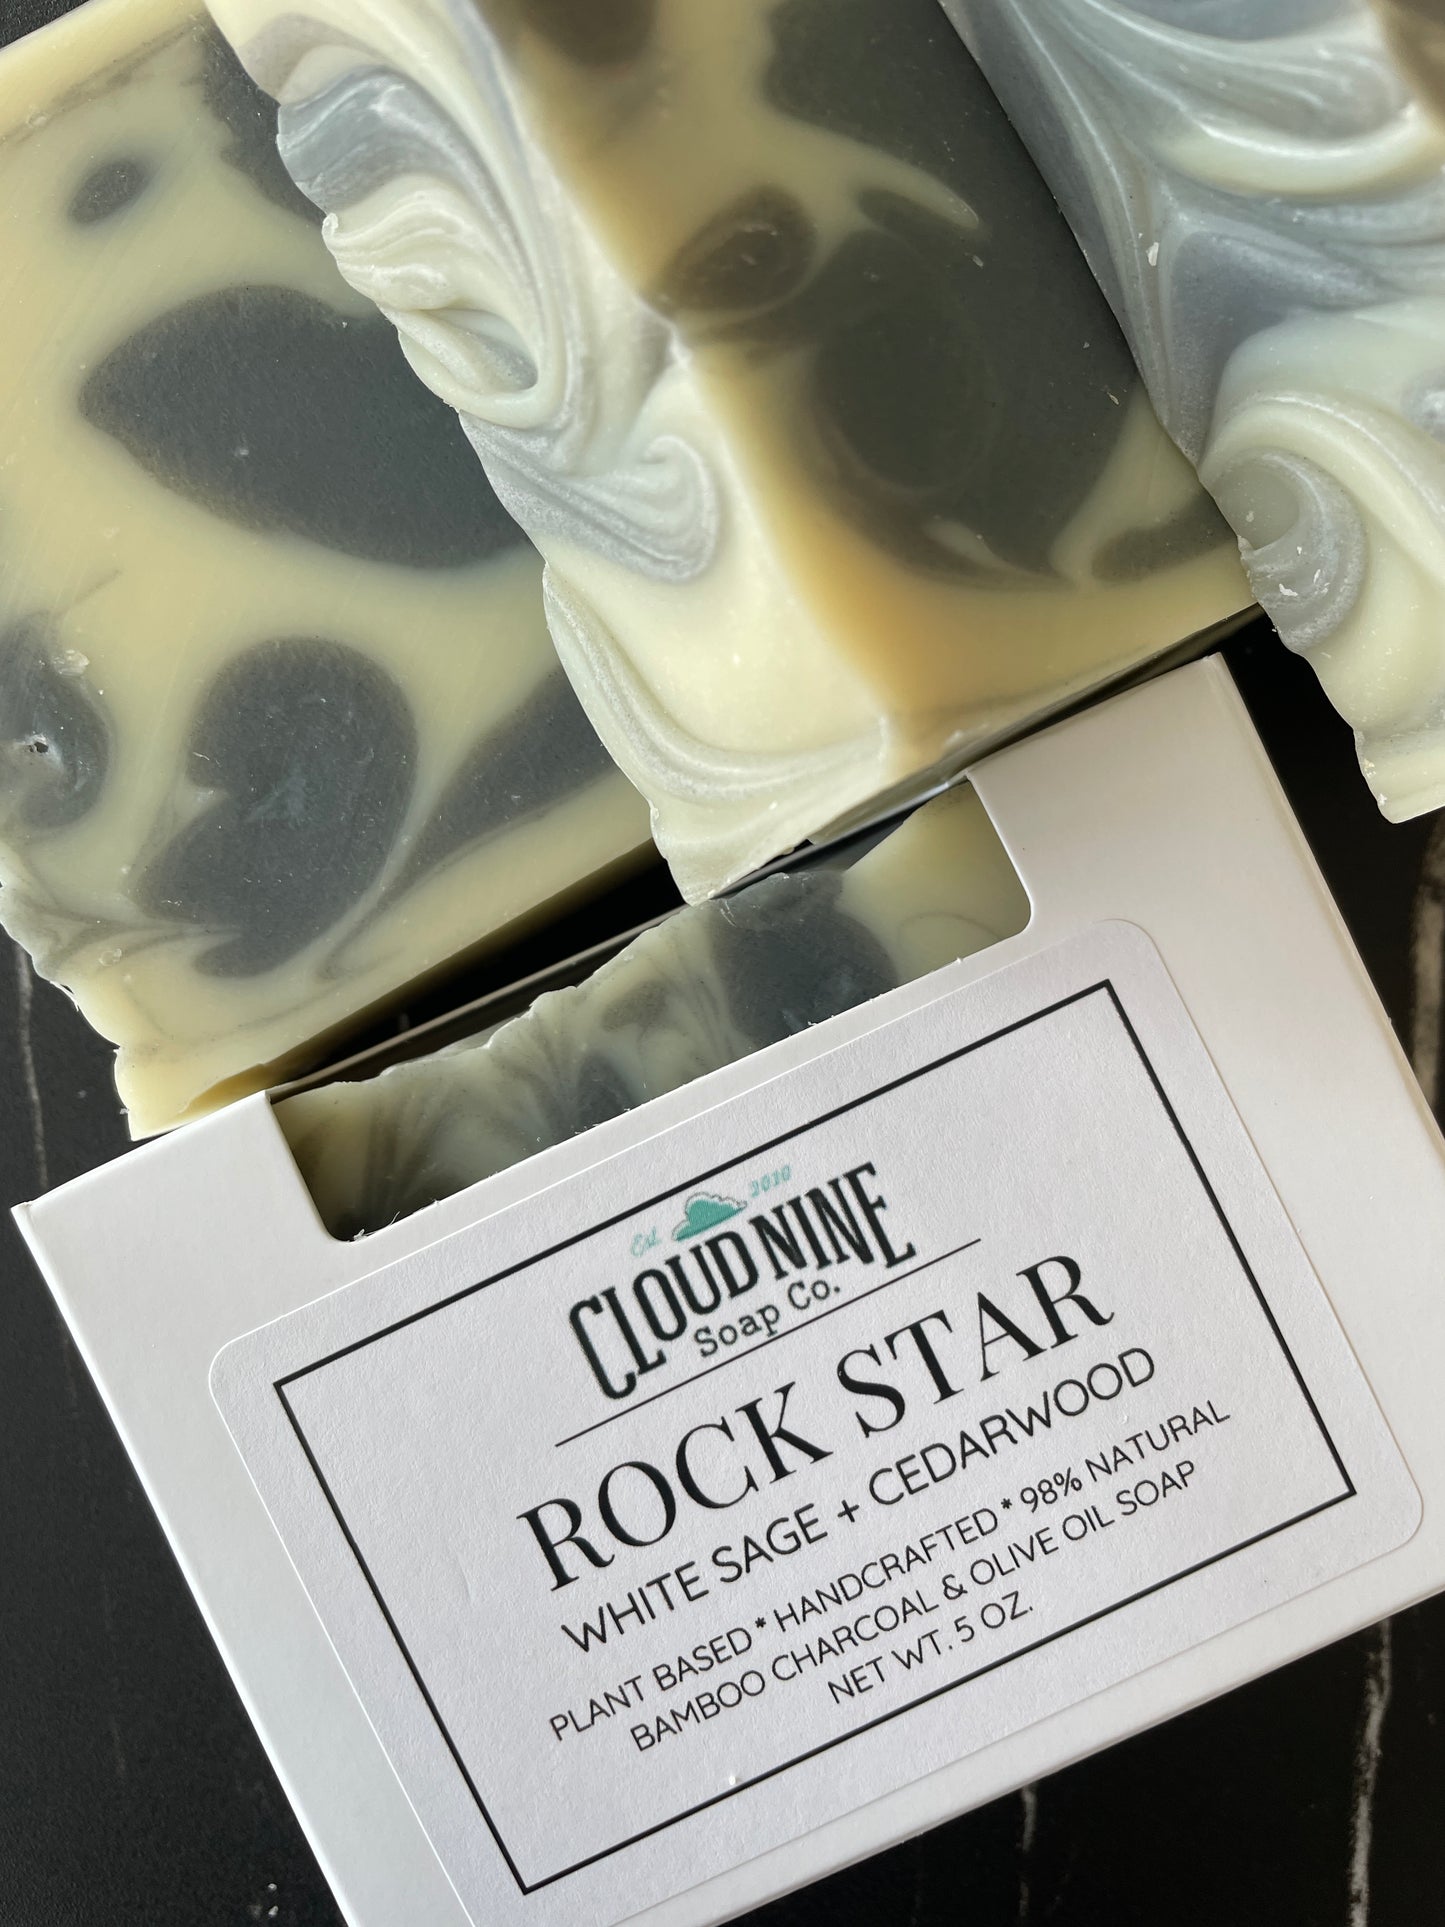 Rock Star Soap: White Sage + Cedarwood